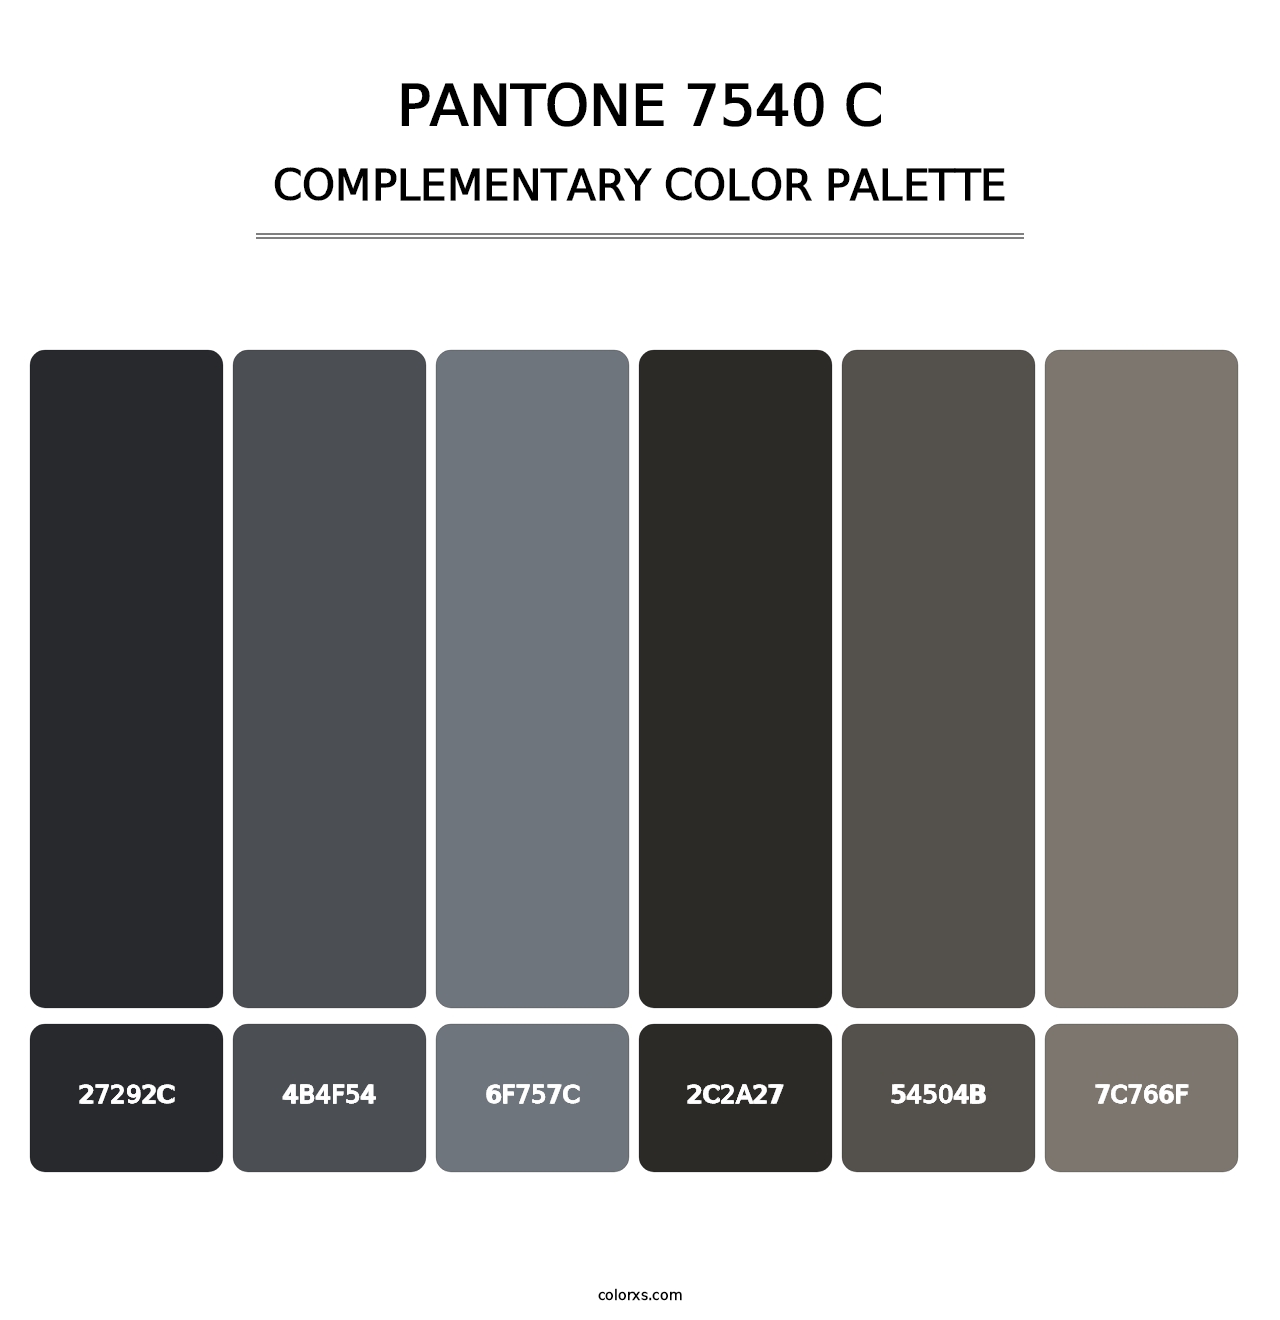 PANTONE 7540 C - Complementary Color Palette